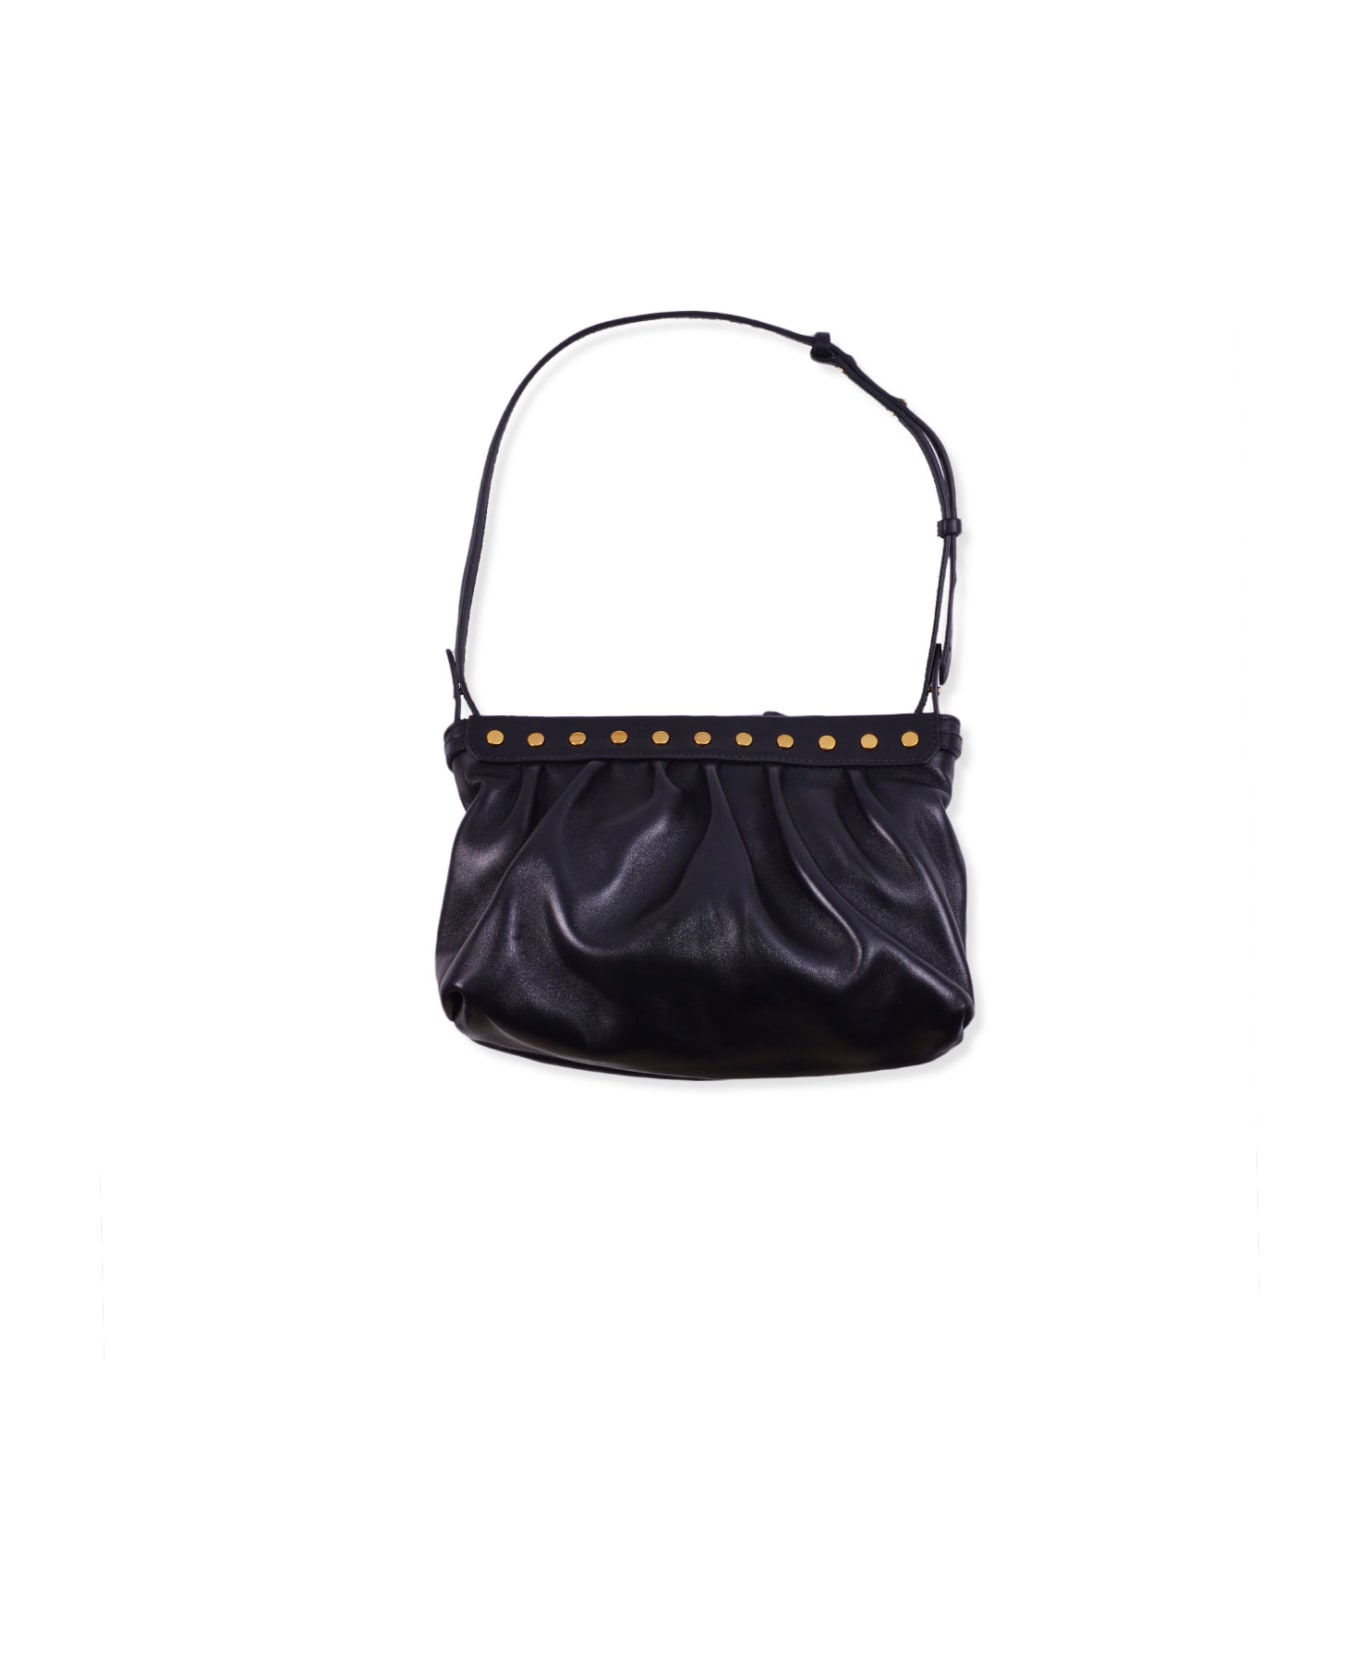 Isabel Marant Handbag - Black/Gold トートバッグ